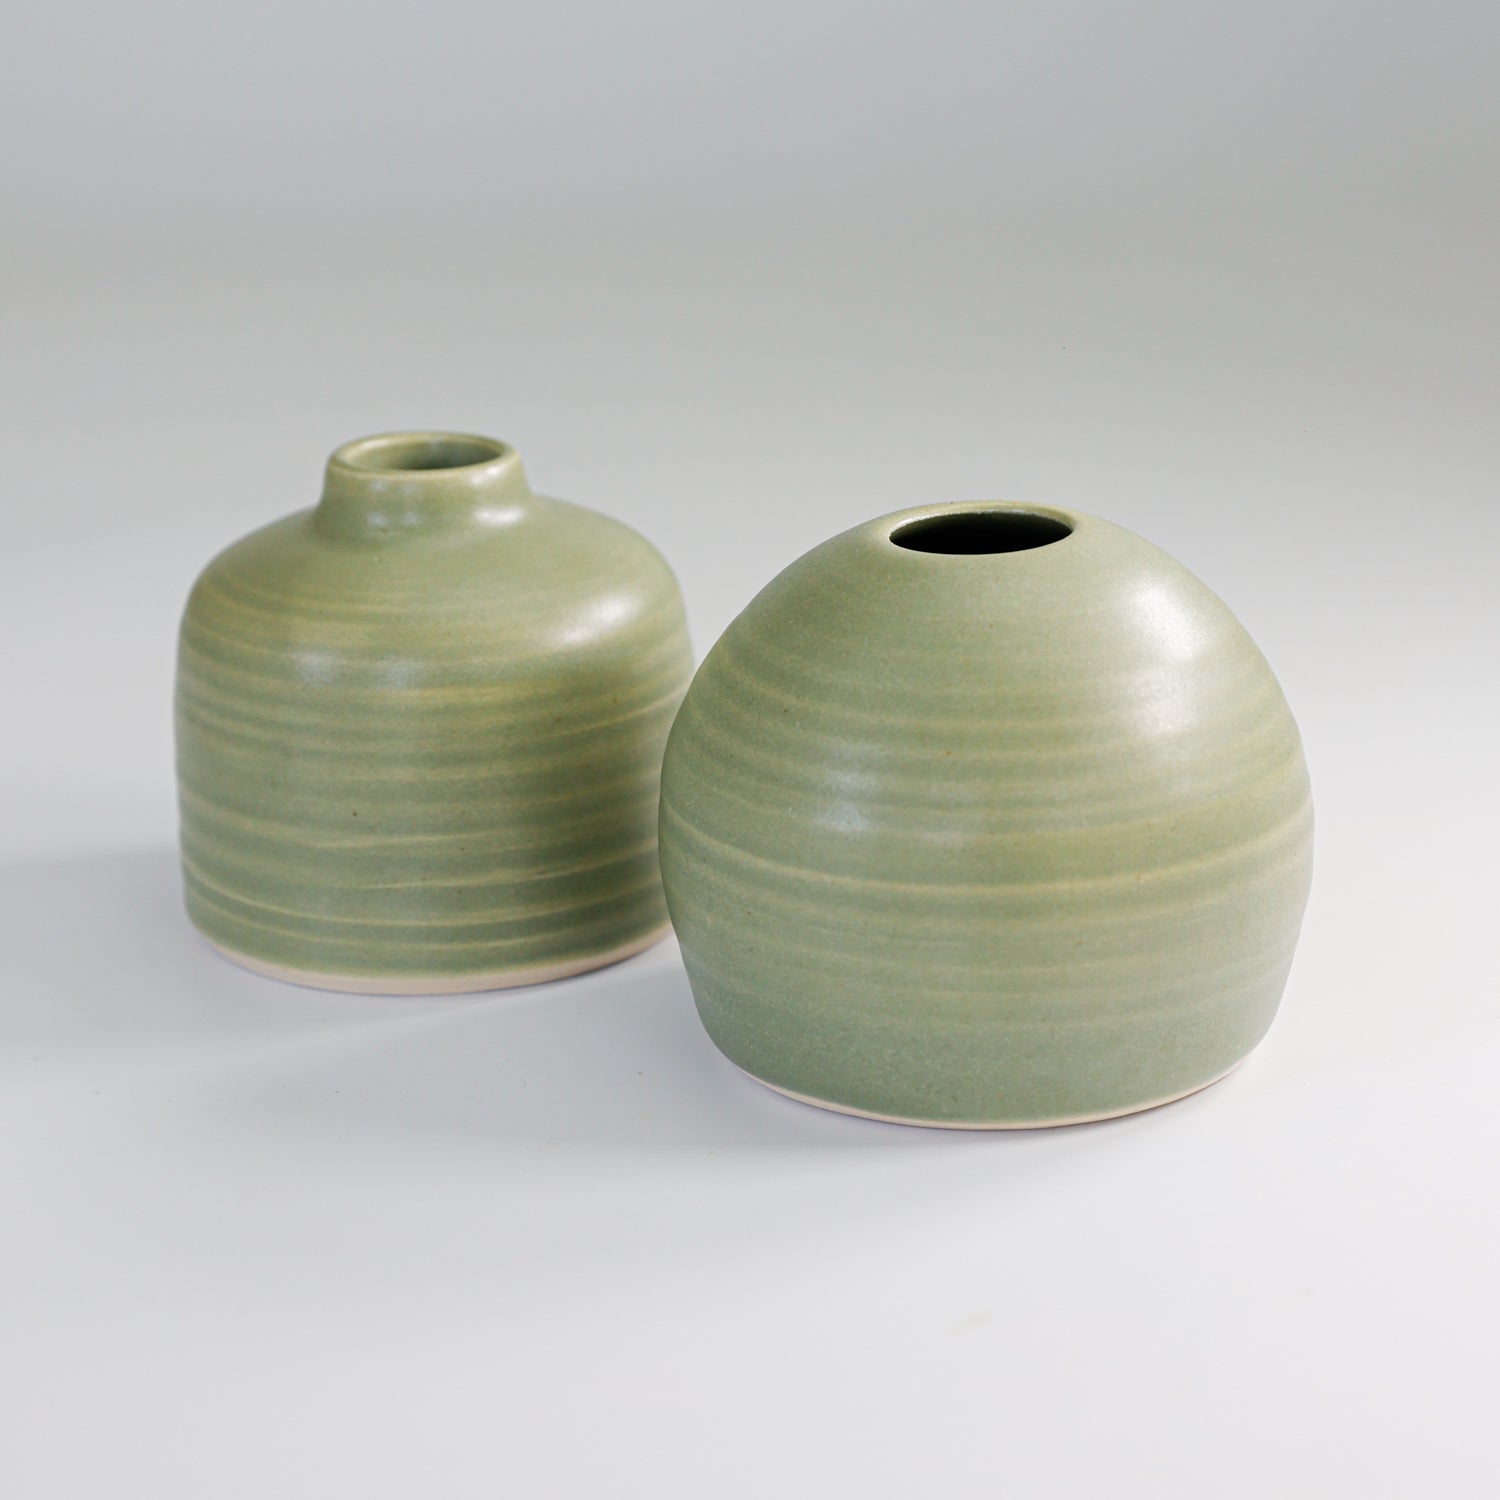 Pair of small green handmade ceramic bud vases 